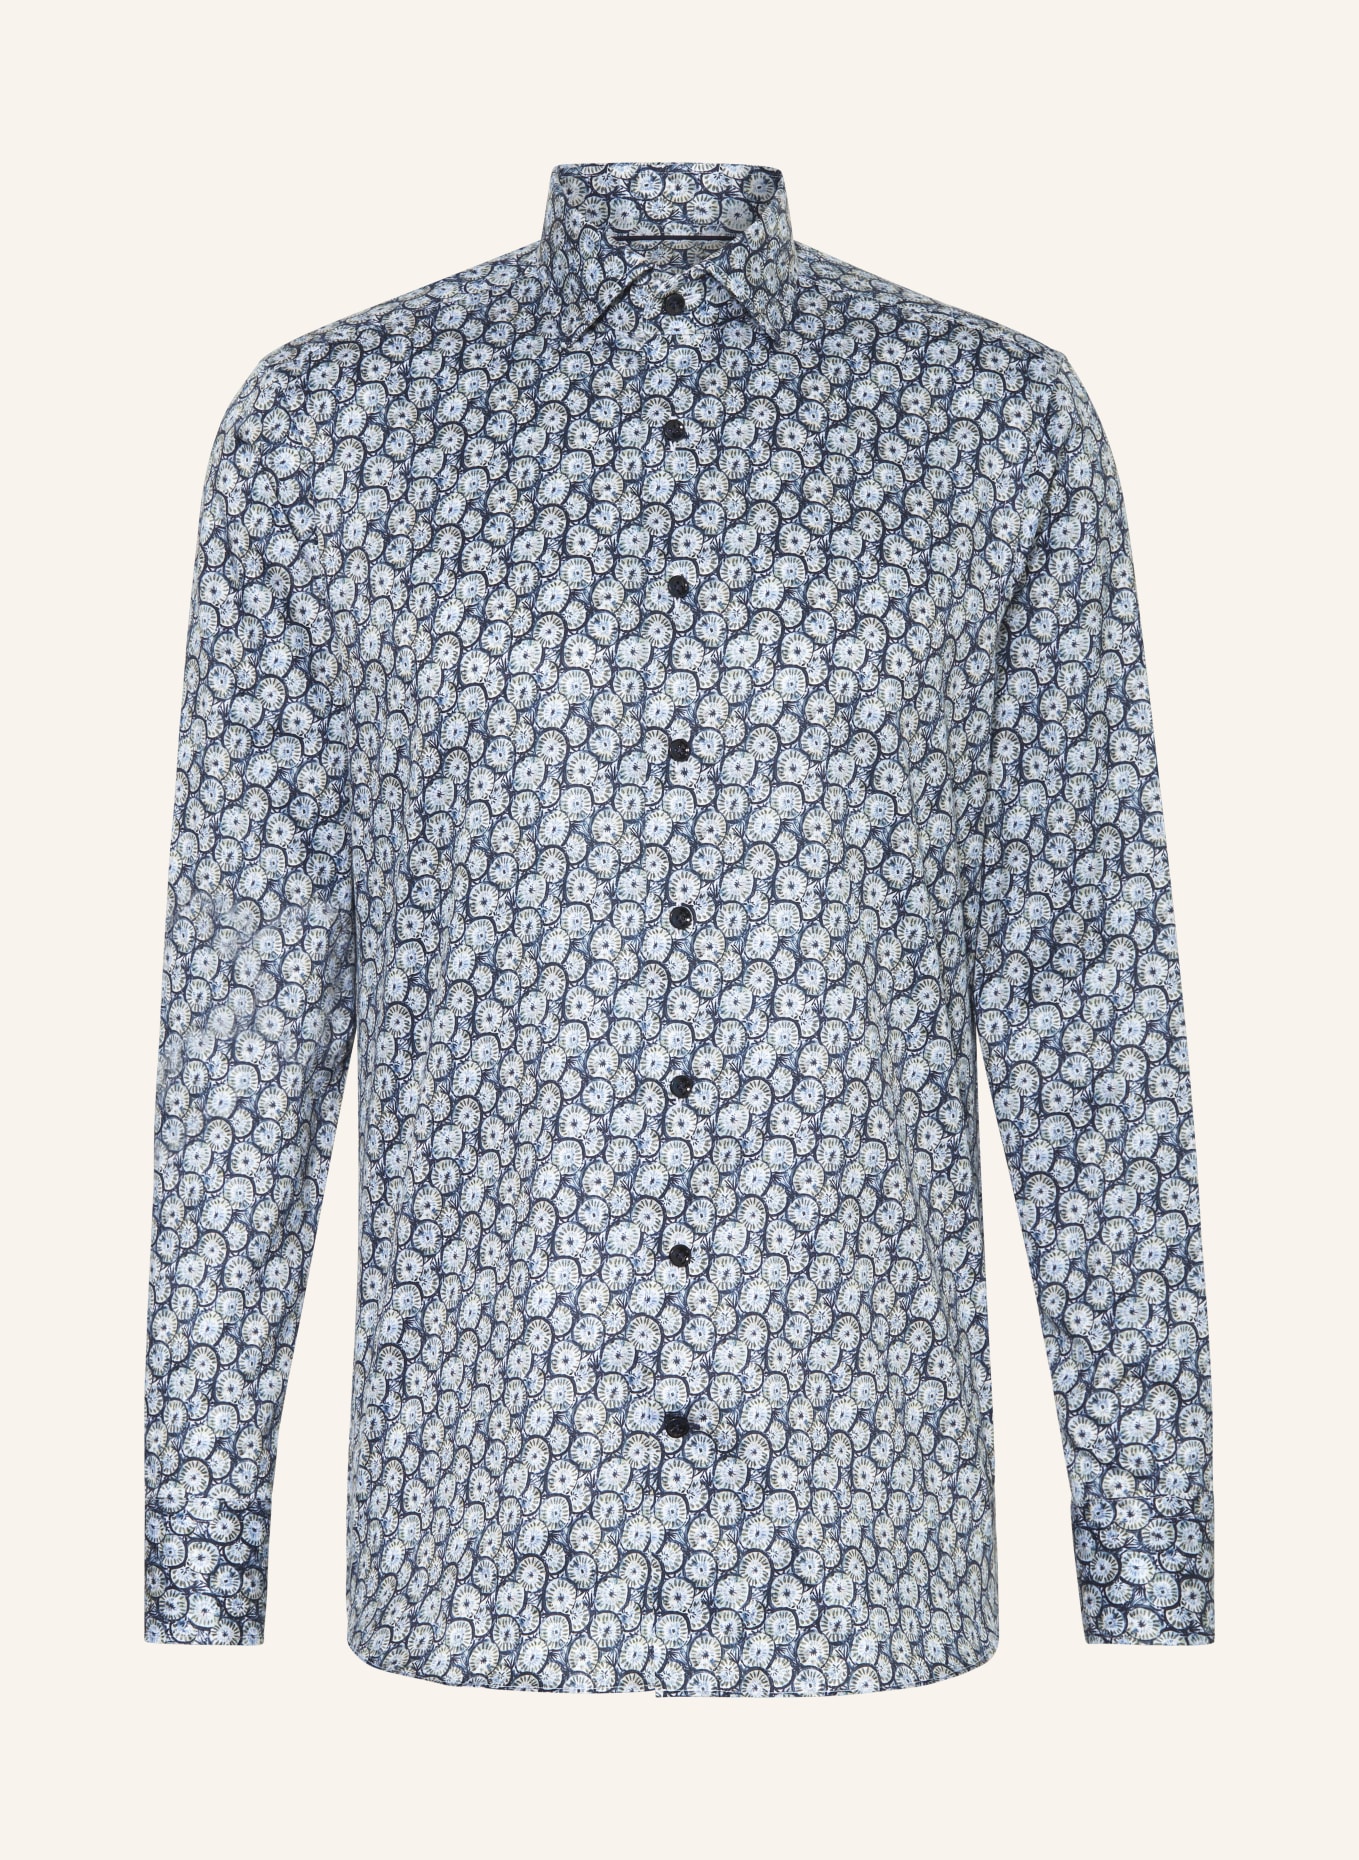 OLYMP SIGNATURE Hemd tailored fit, Farbe: OLIV/ BLAU/ WEISS (Bild 1)